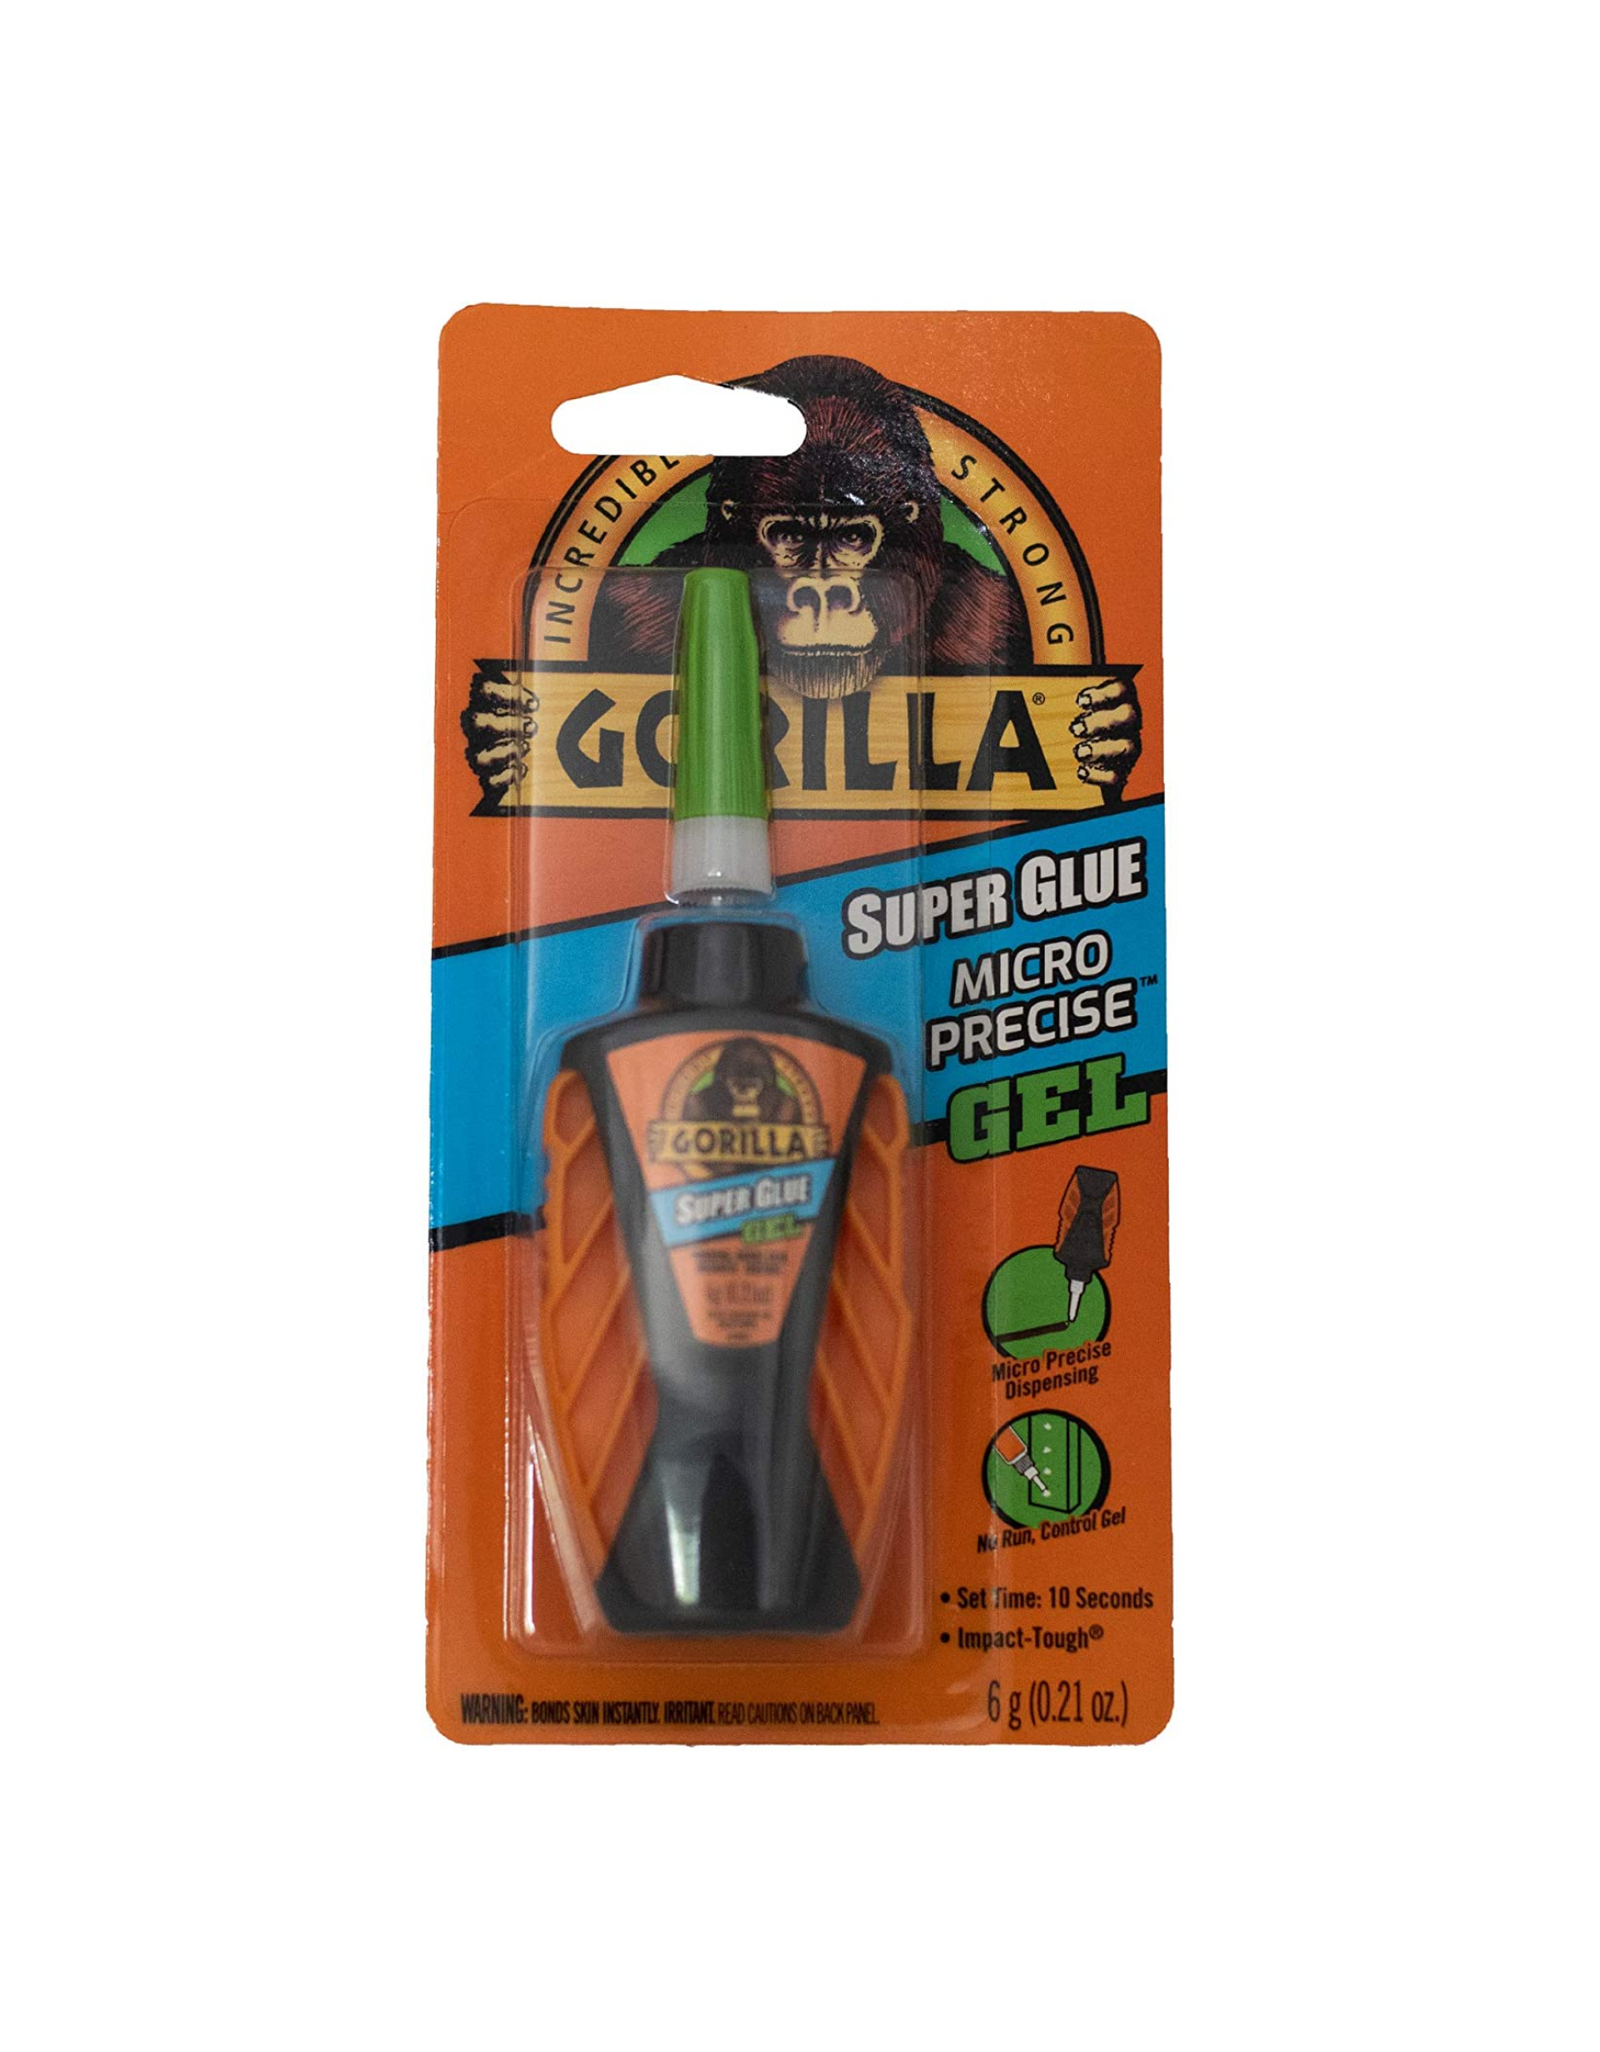 Gorilla Micro Precise Super Glue Gel, 0.21 oz (6 Grams), Pack of 1